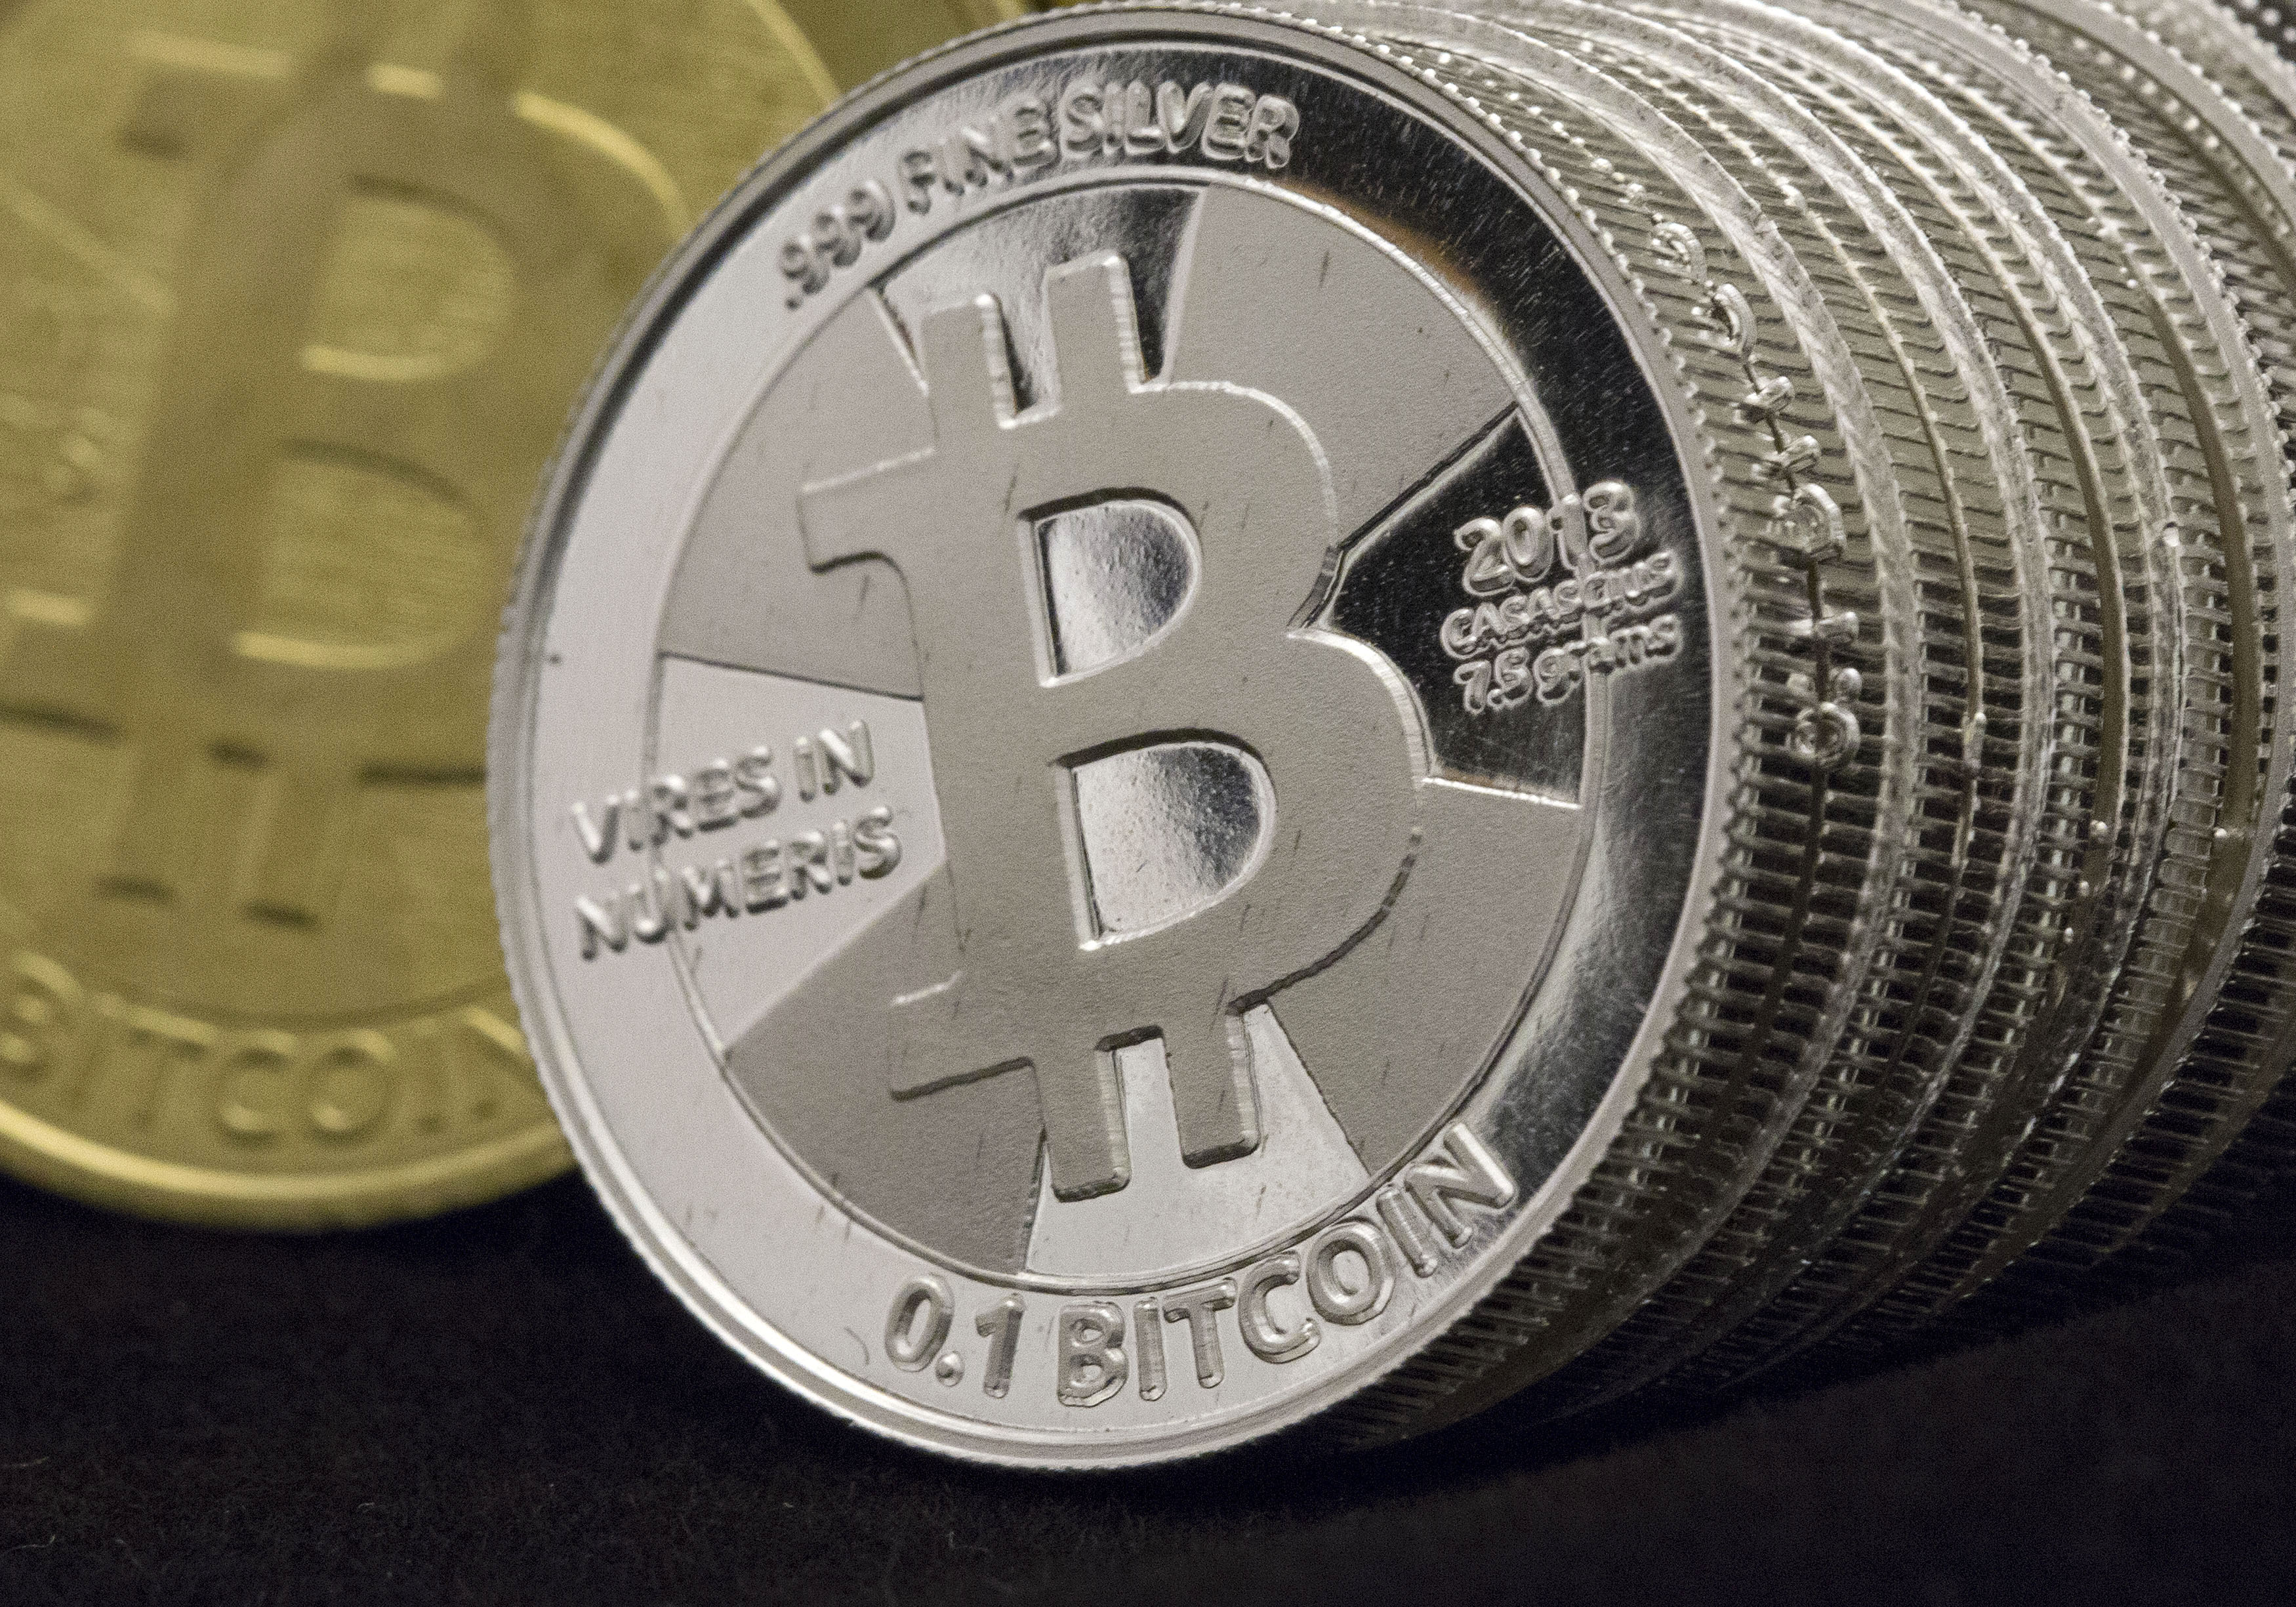 Bitcoin Hits $9,000 Mark as Mainstream Acceptance Grows